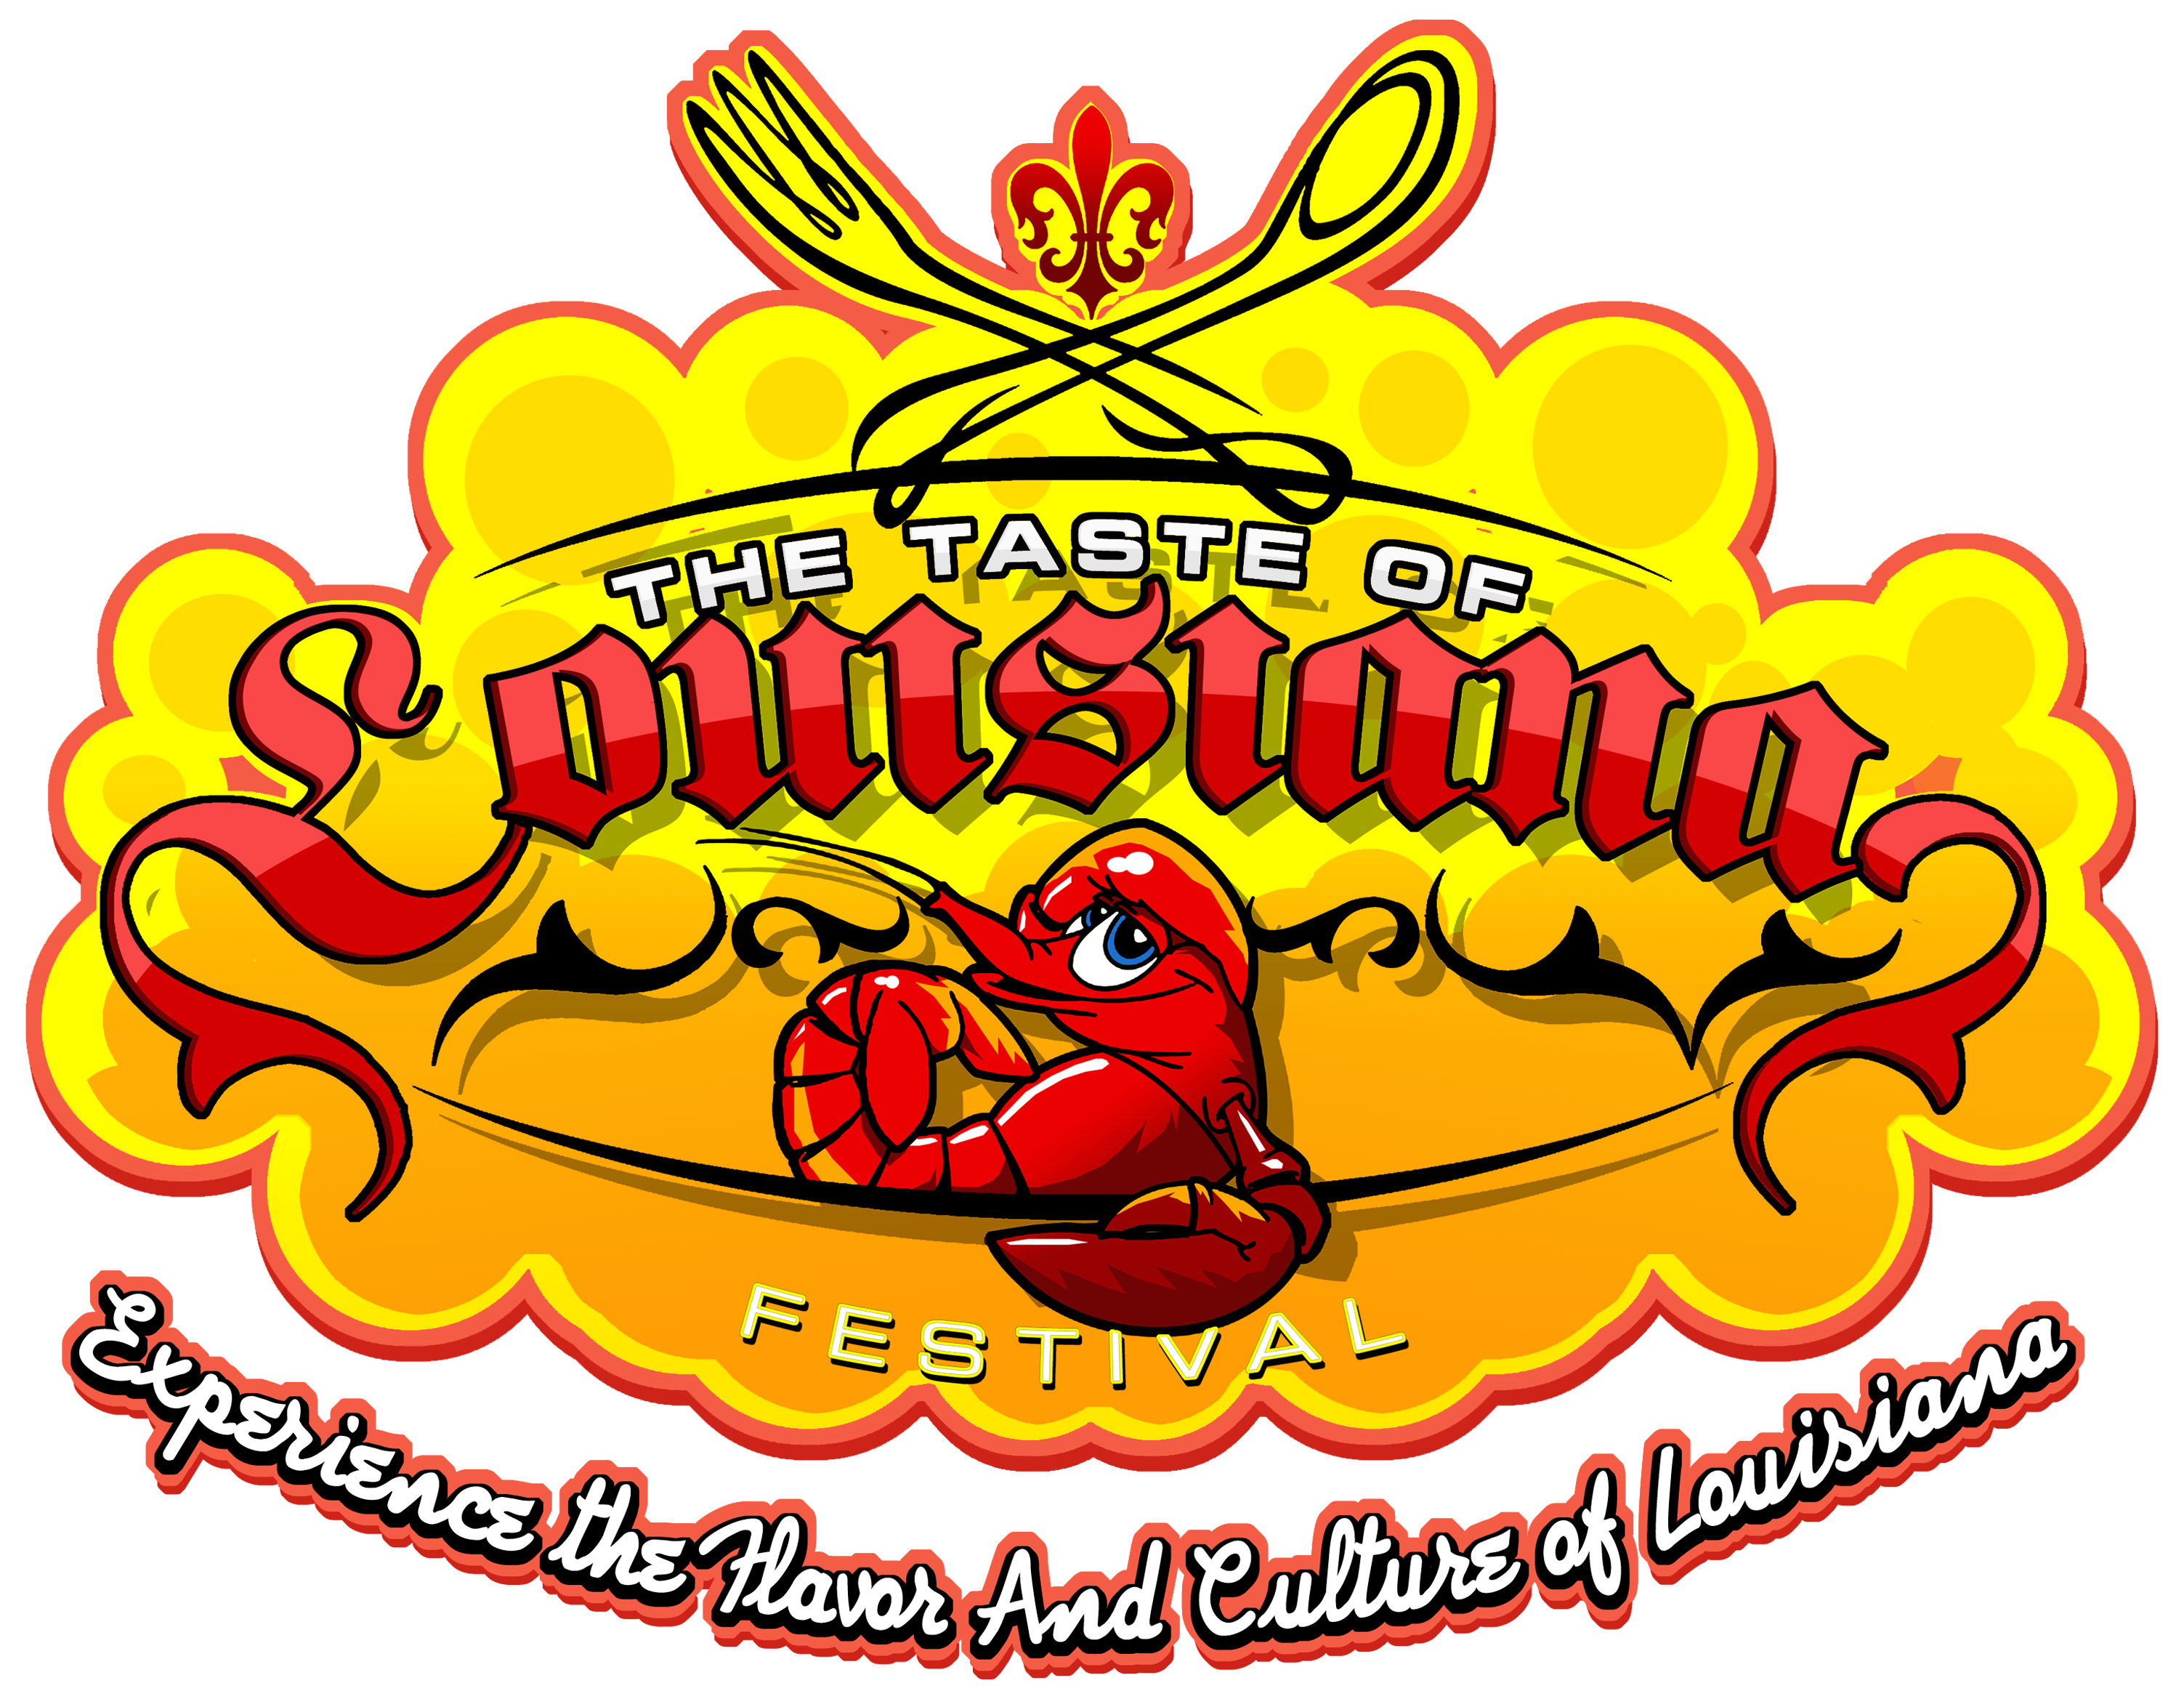 The Taste of Louisiana Festival